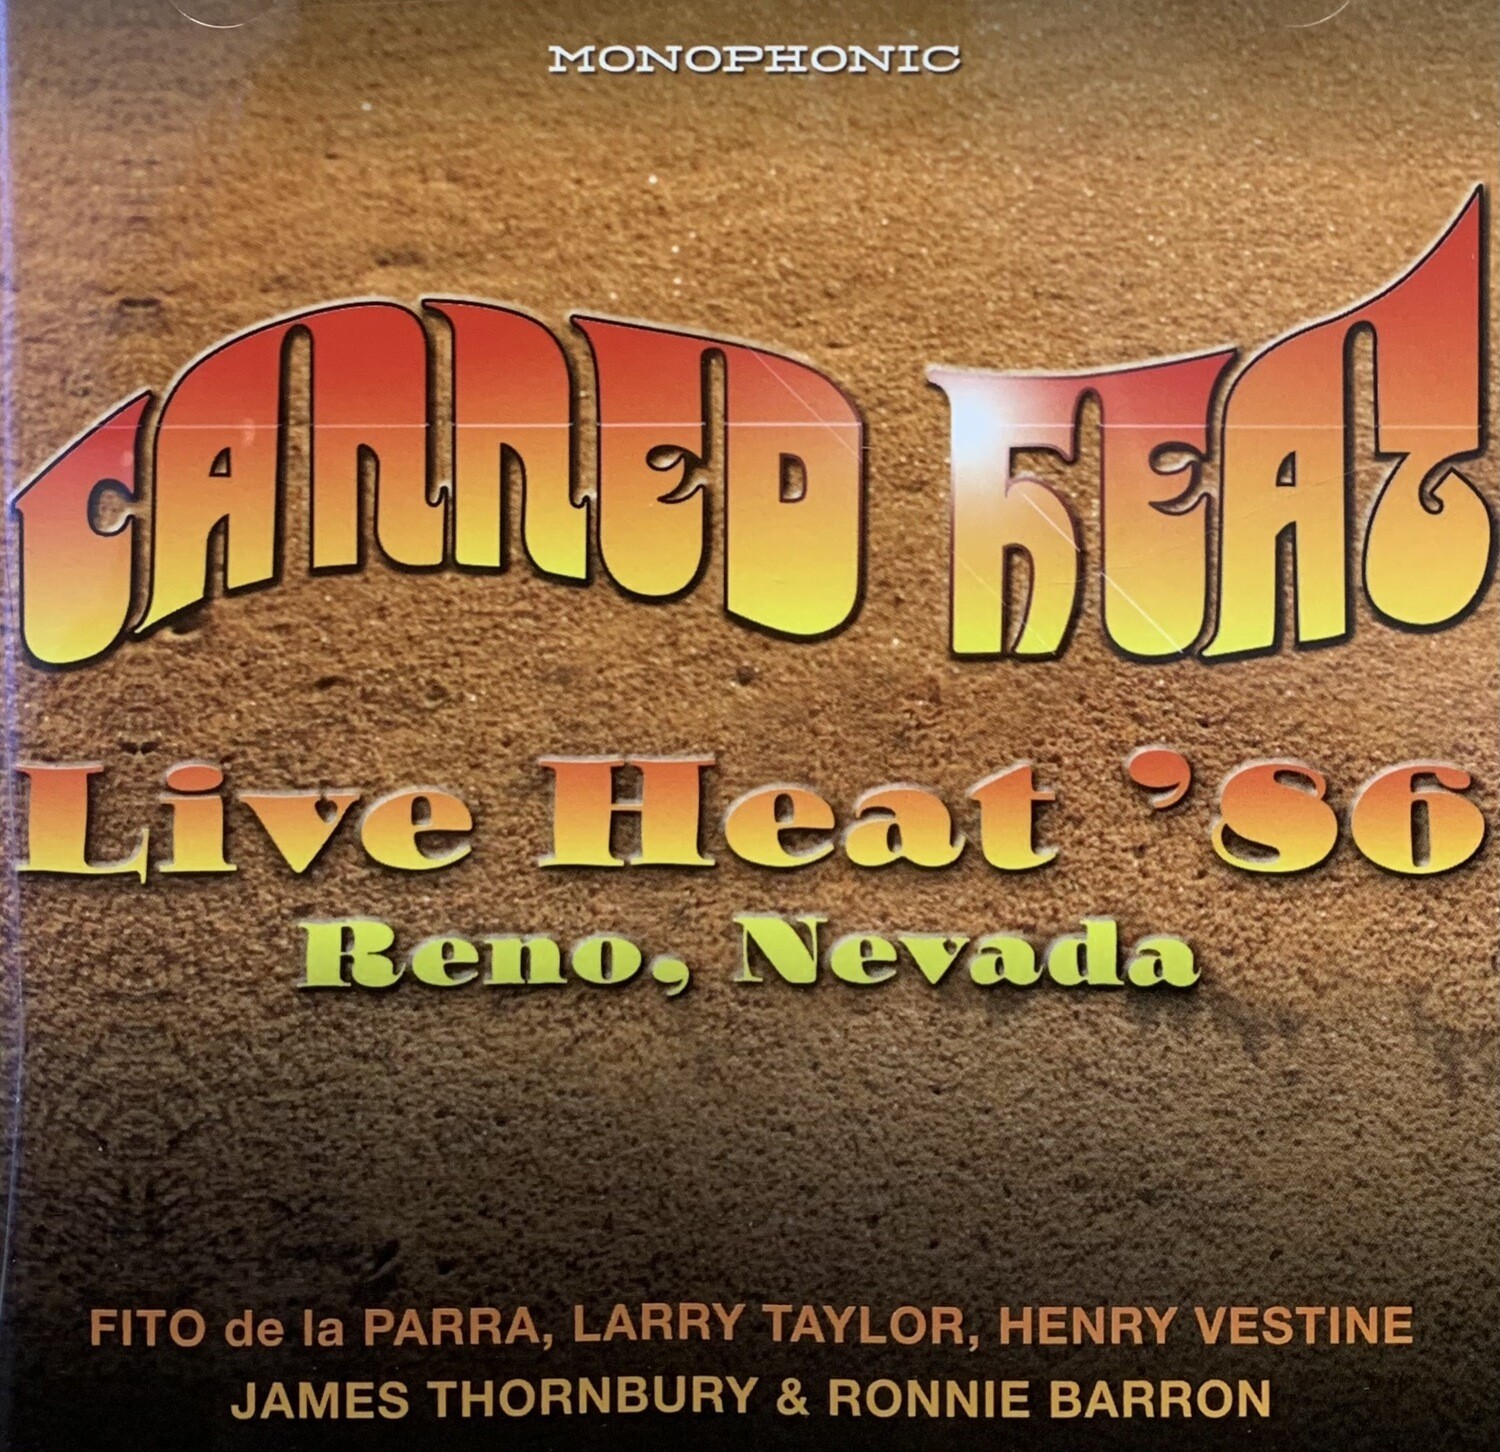 Live Heat '86 CD